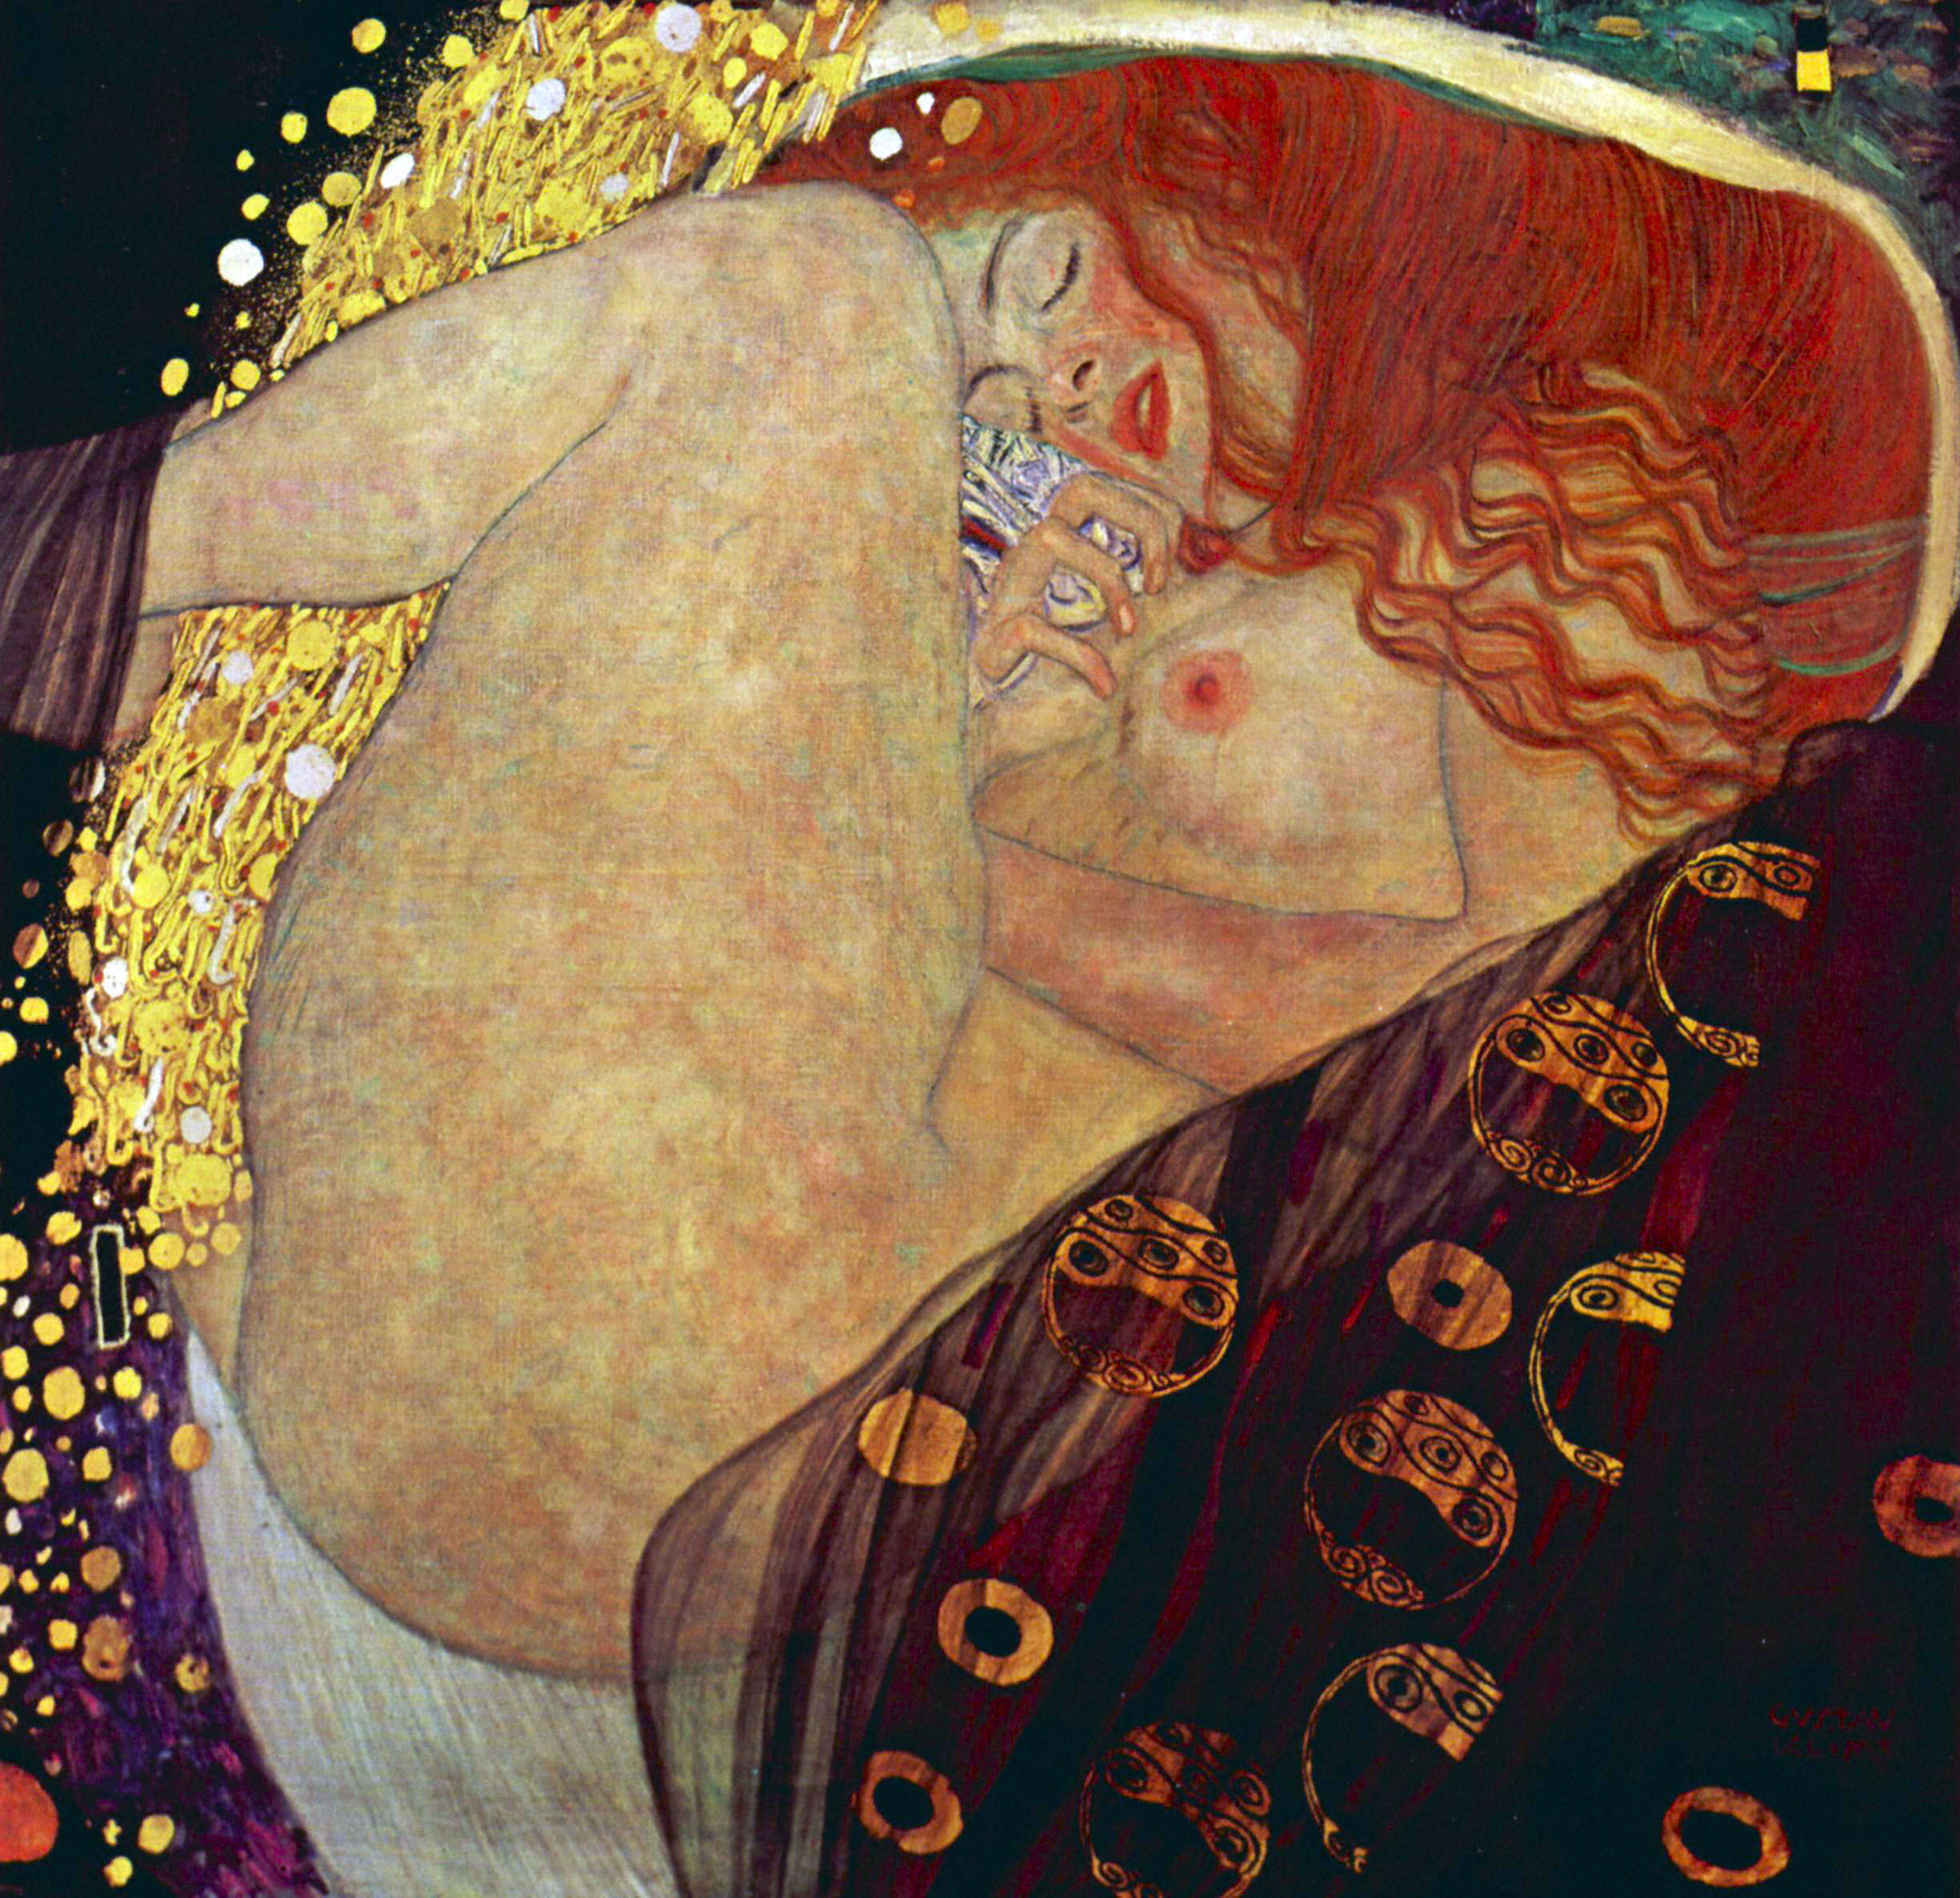 Danae by Gustav Klimt - 1907 özel koleksiyon